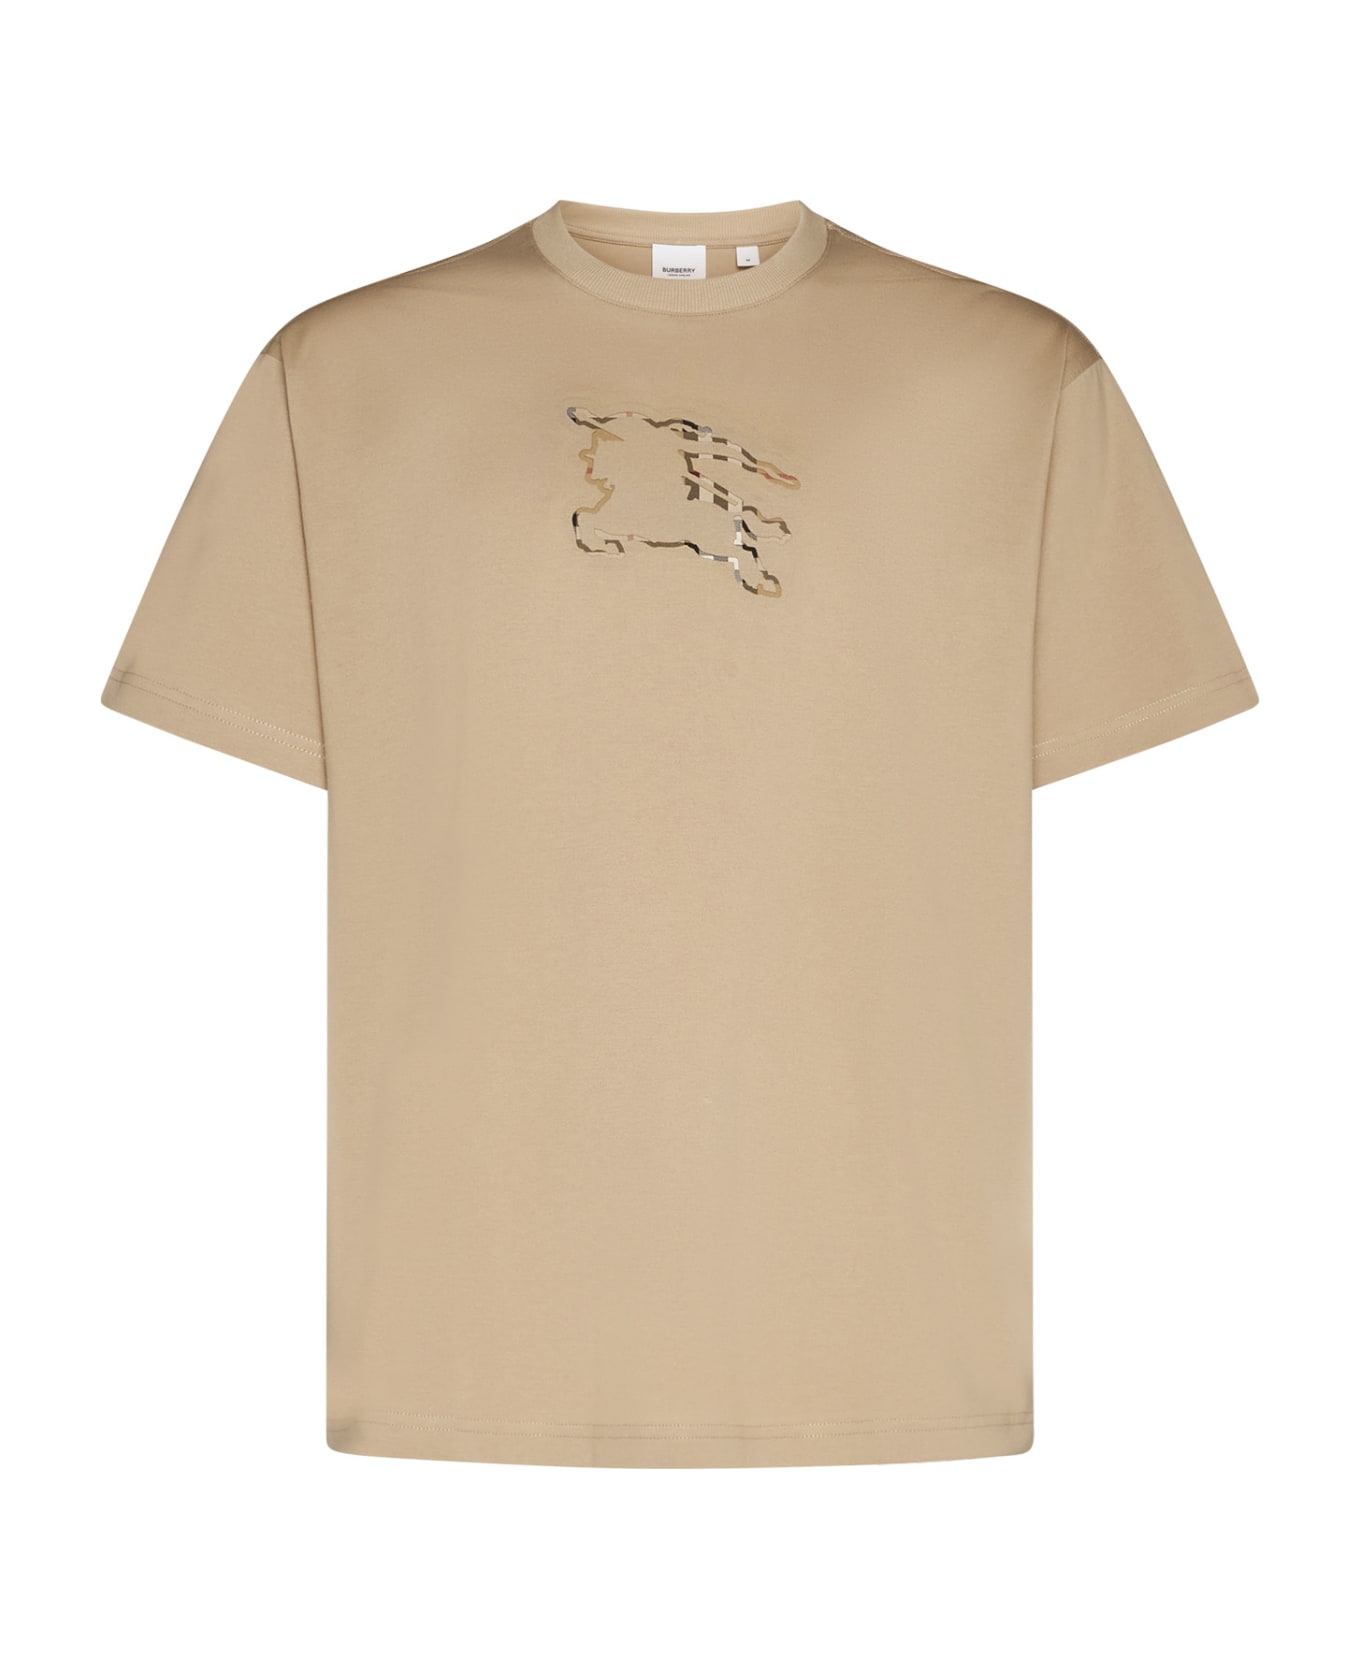 Burberry Padbury T-shirt - Soft Fawn